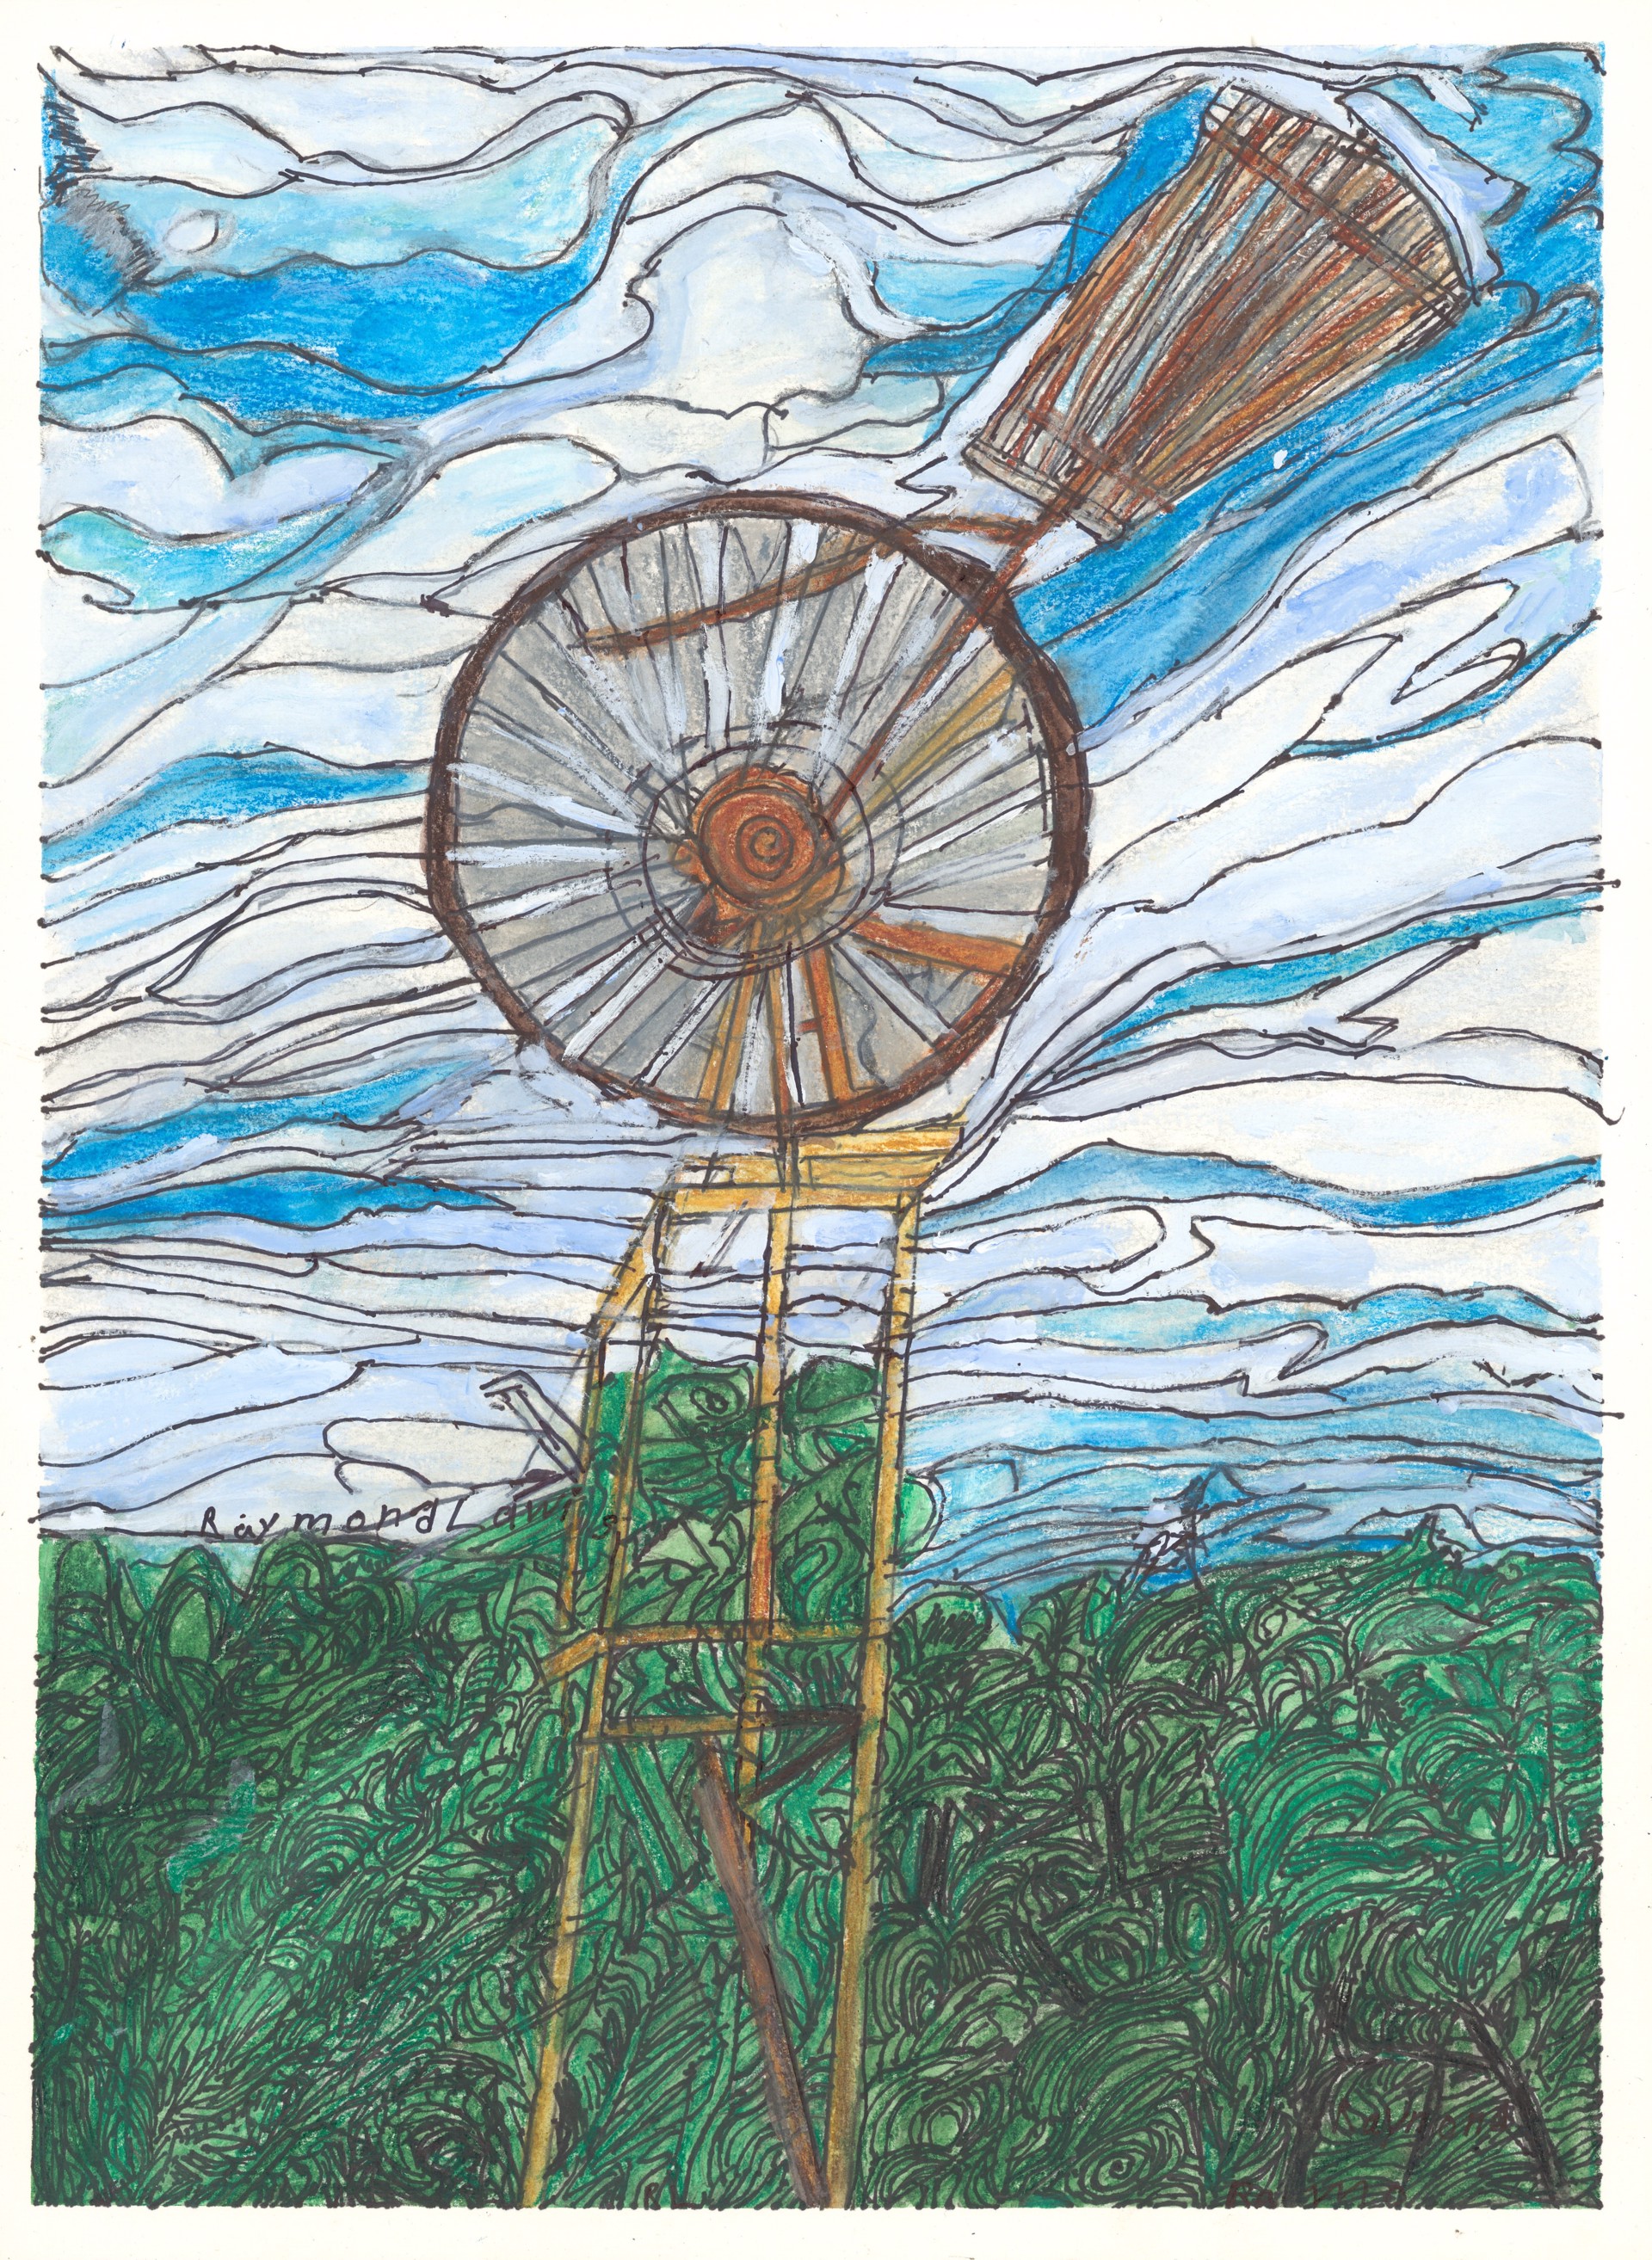 The Windmill Farm by Raymond Lewis